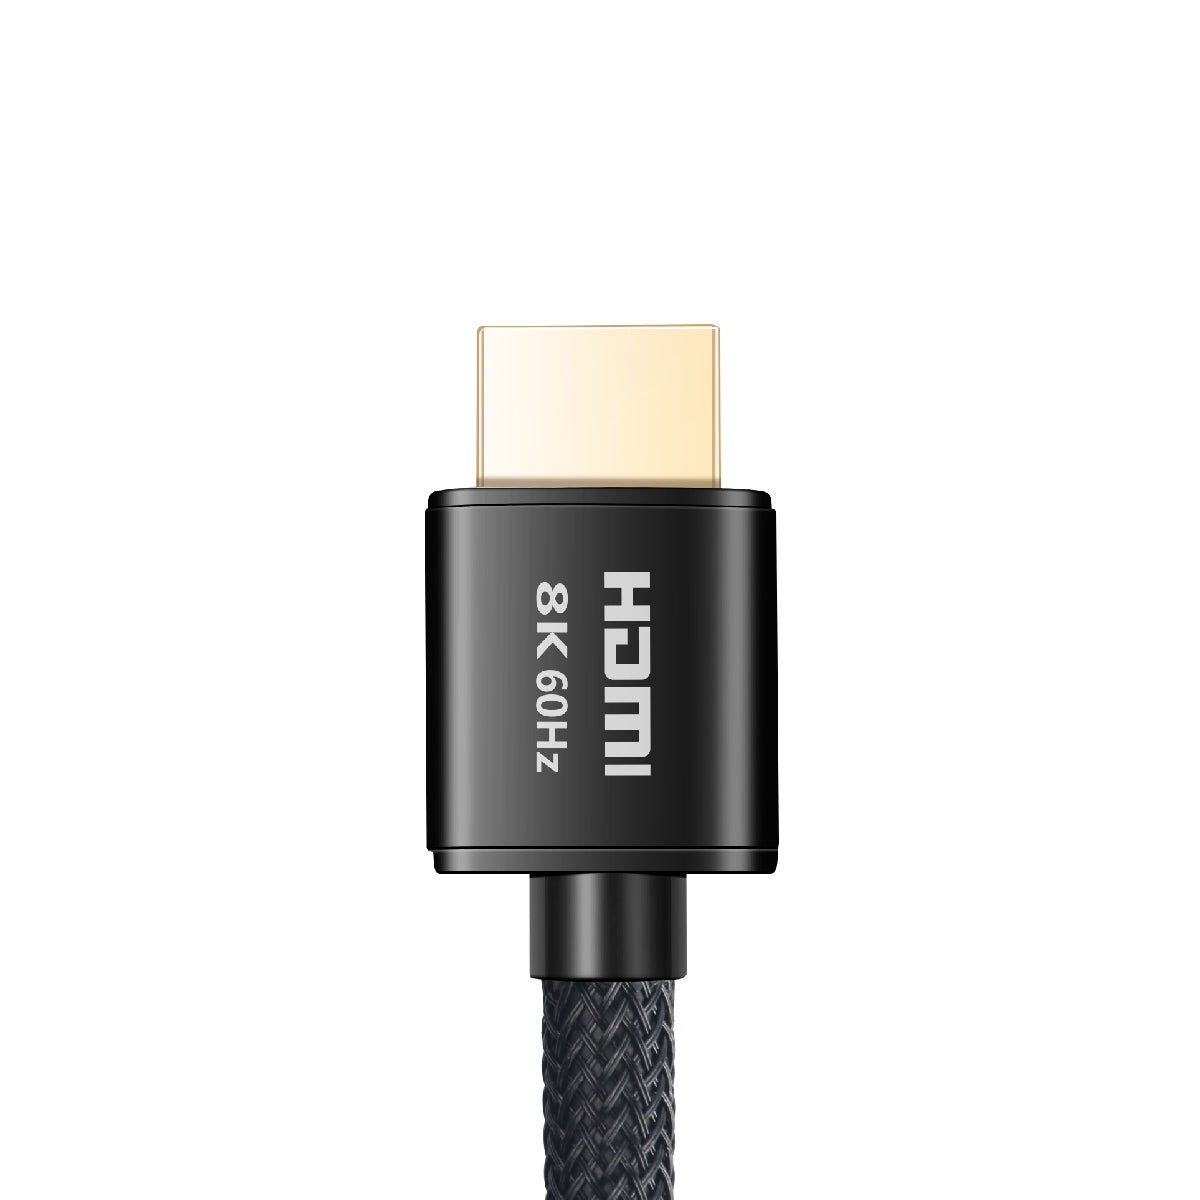 Ultra High Speed HDMI 2.1 Cable Dynamic HDR 1.8M (6ft) 8K (Black) - Milena International Inc